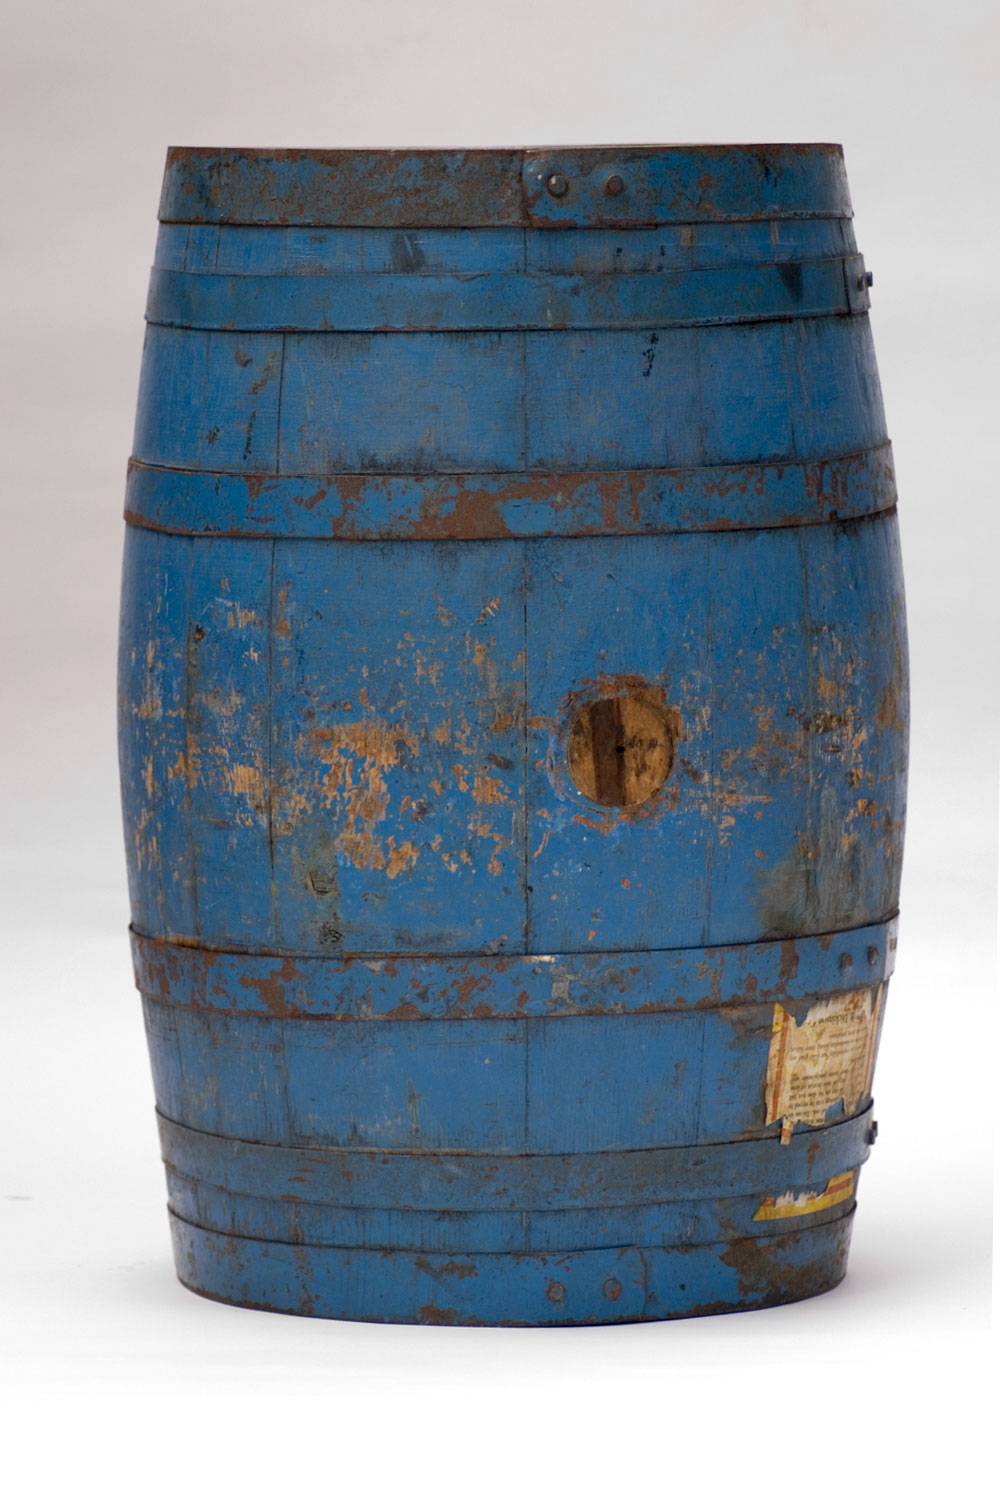 Original Old Blue Paint Antique Wooden Advertising Barrel